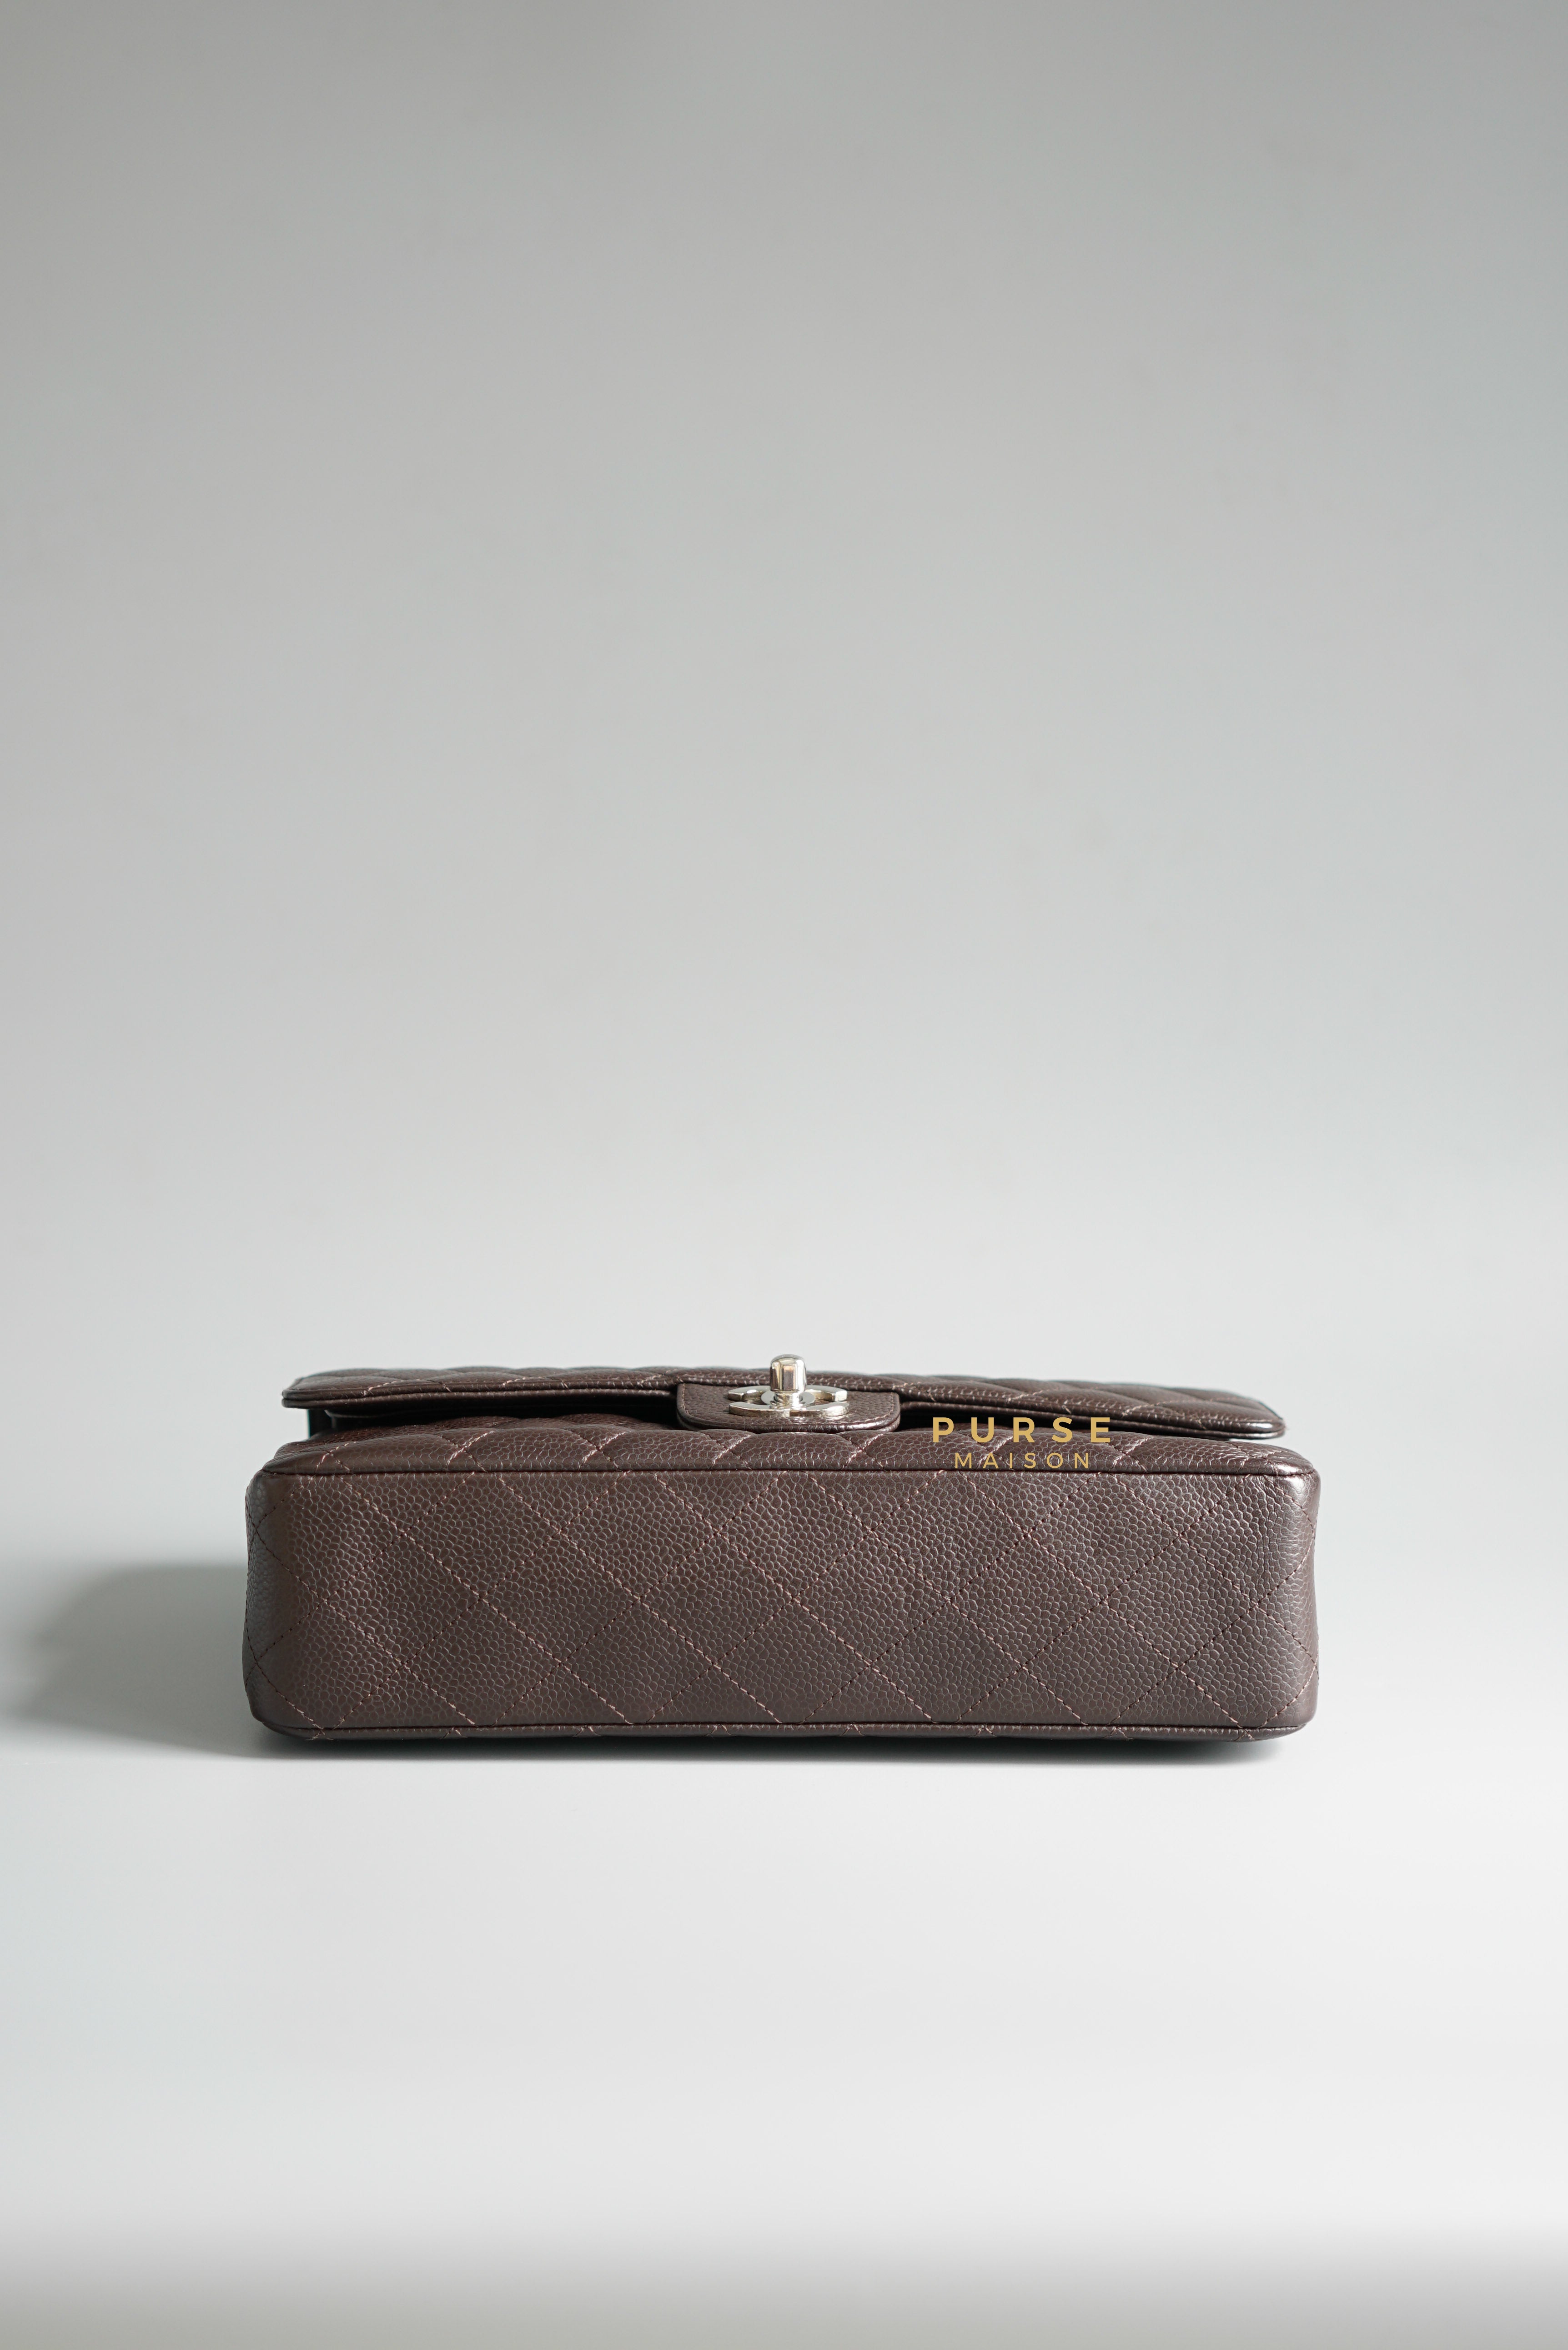 Chanel - Classic Flap Bag - Medium | Bagista